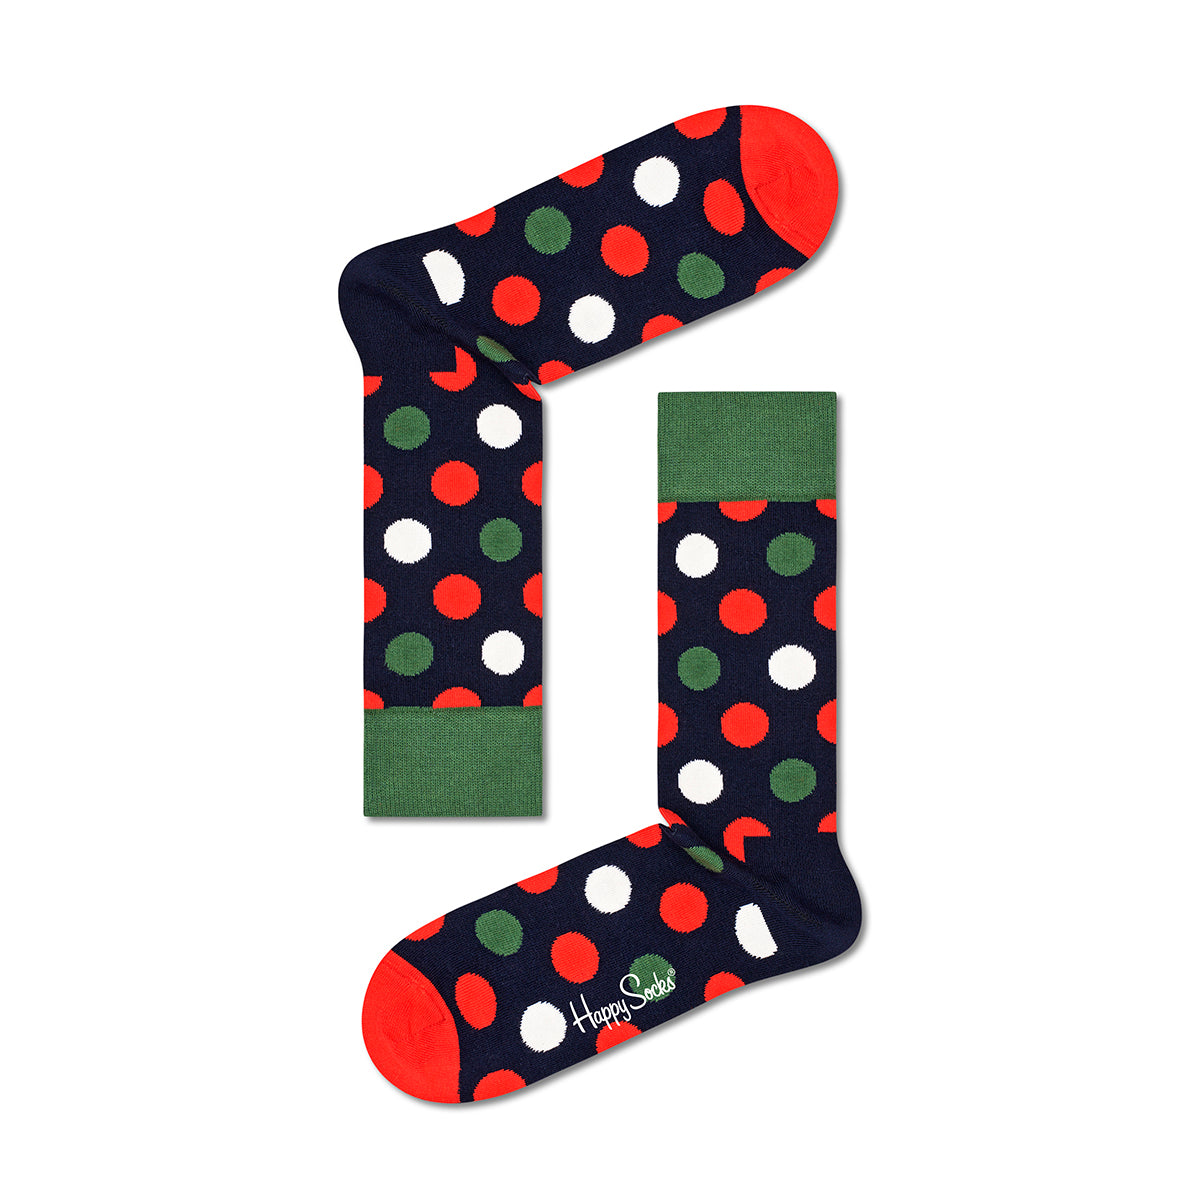 Classic Holiday Socks Gift Box by Happy Socks